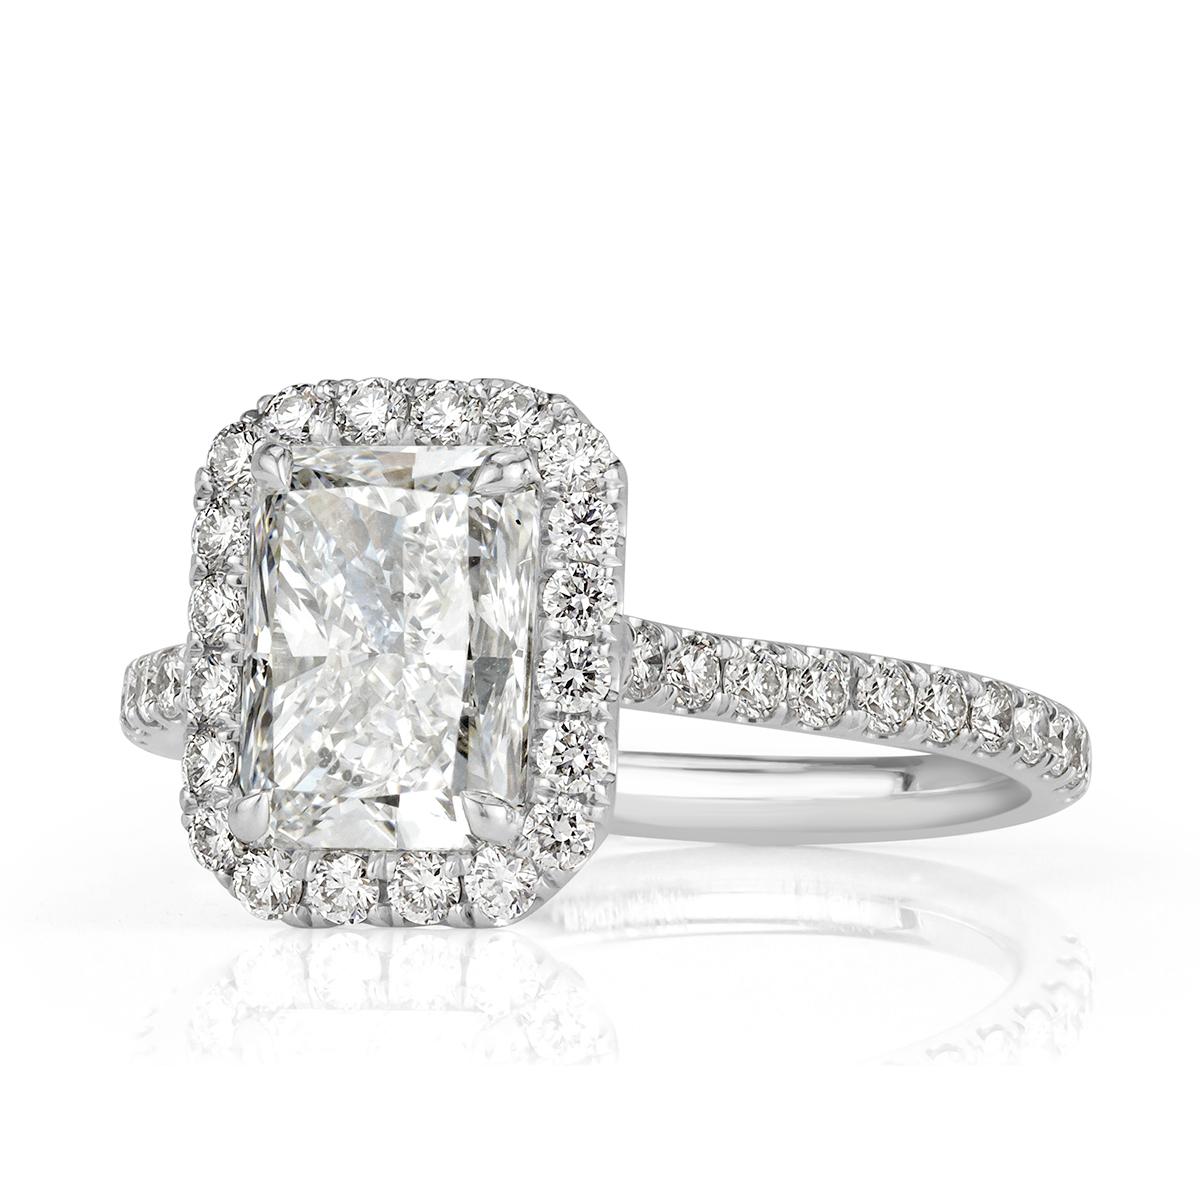 2.77 carat diamond ring